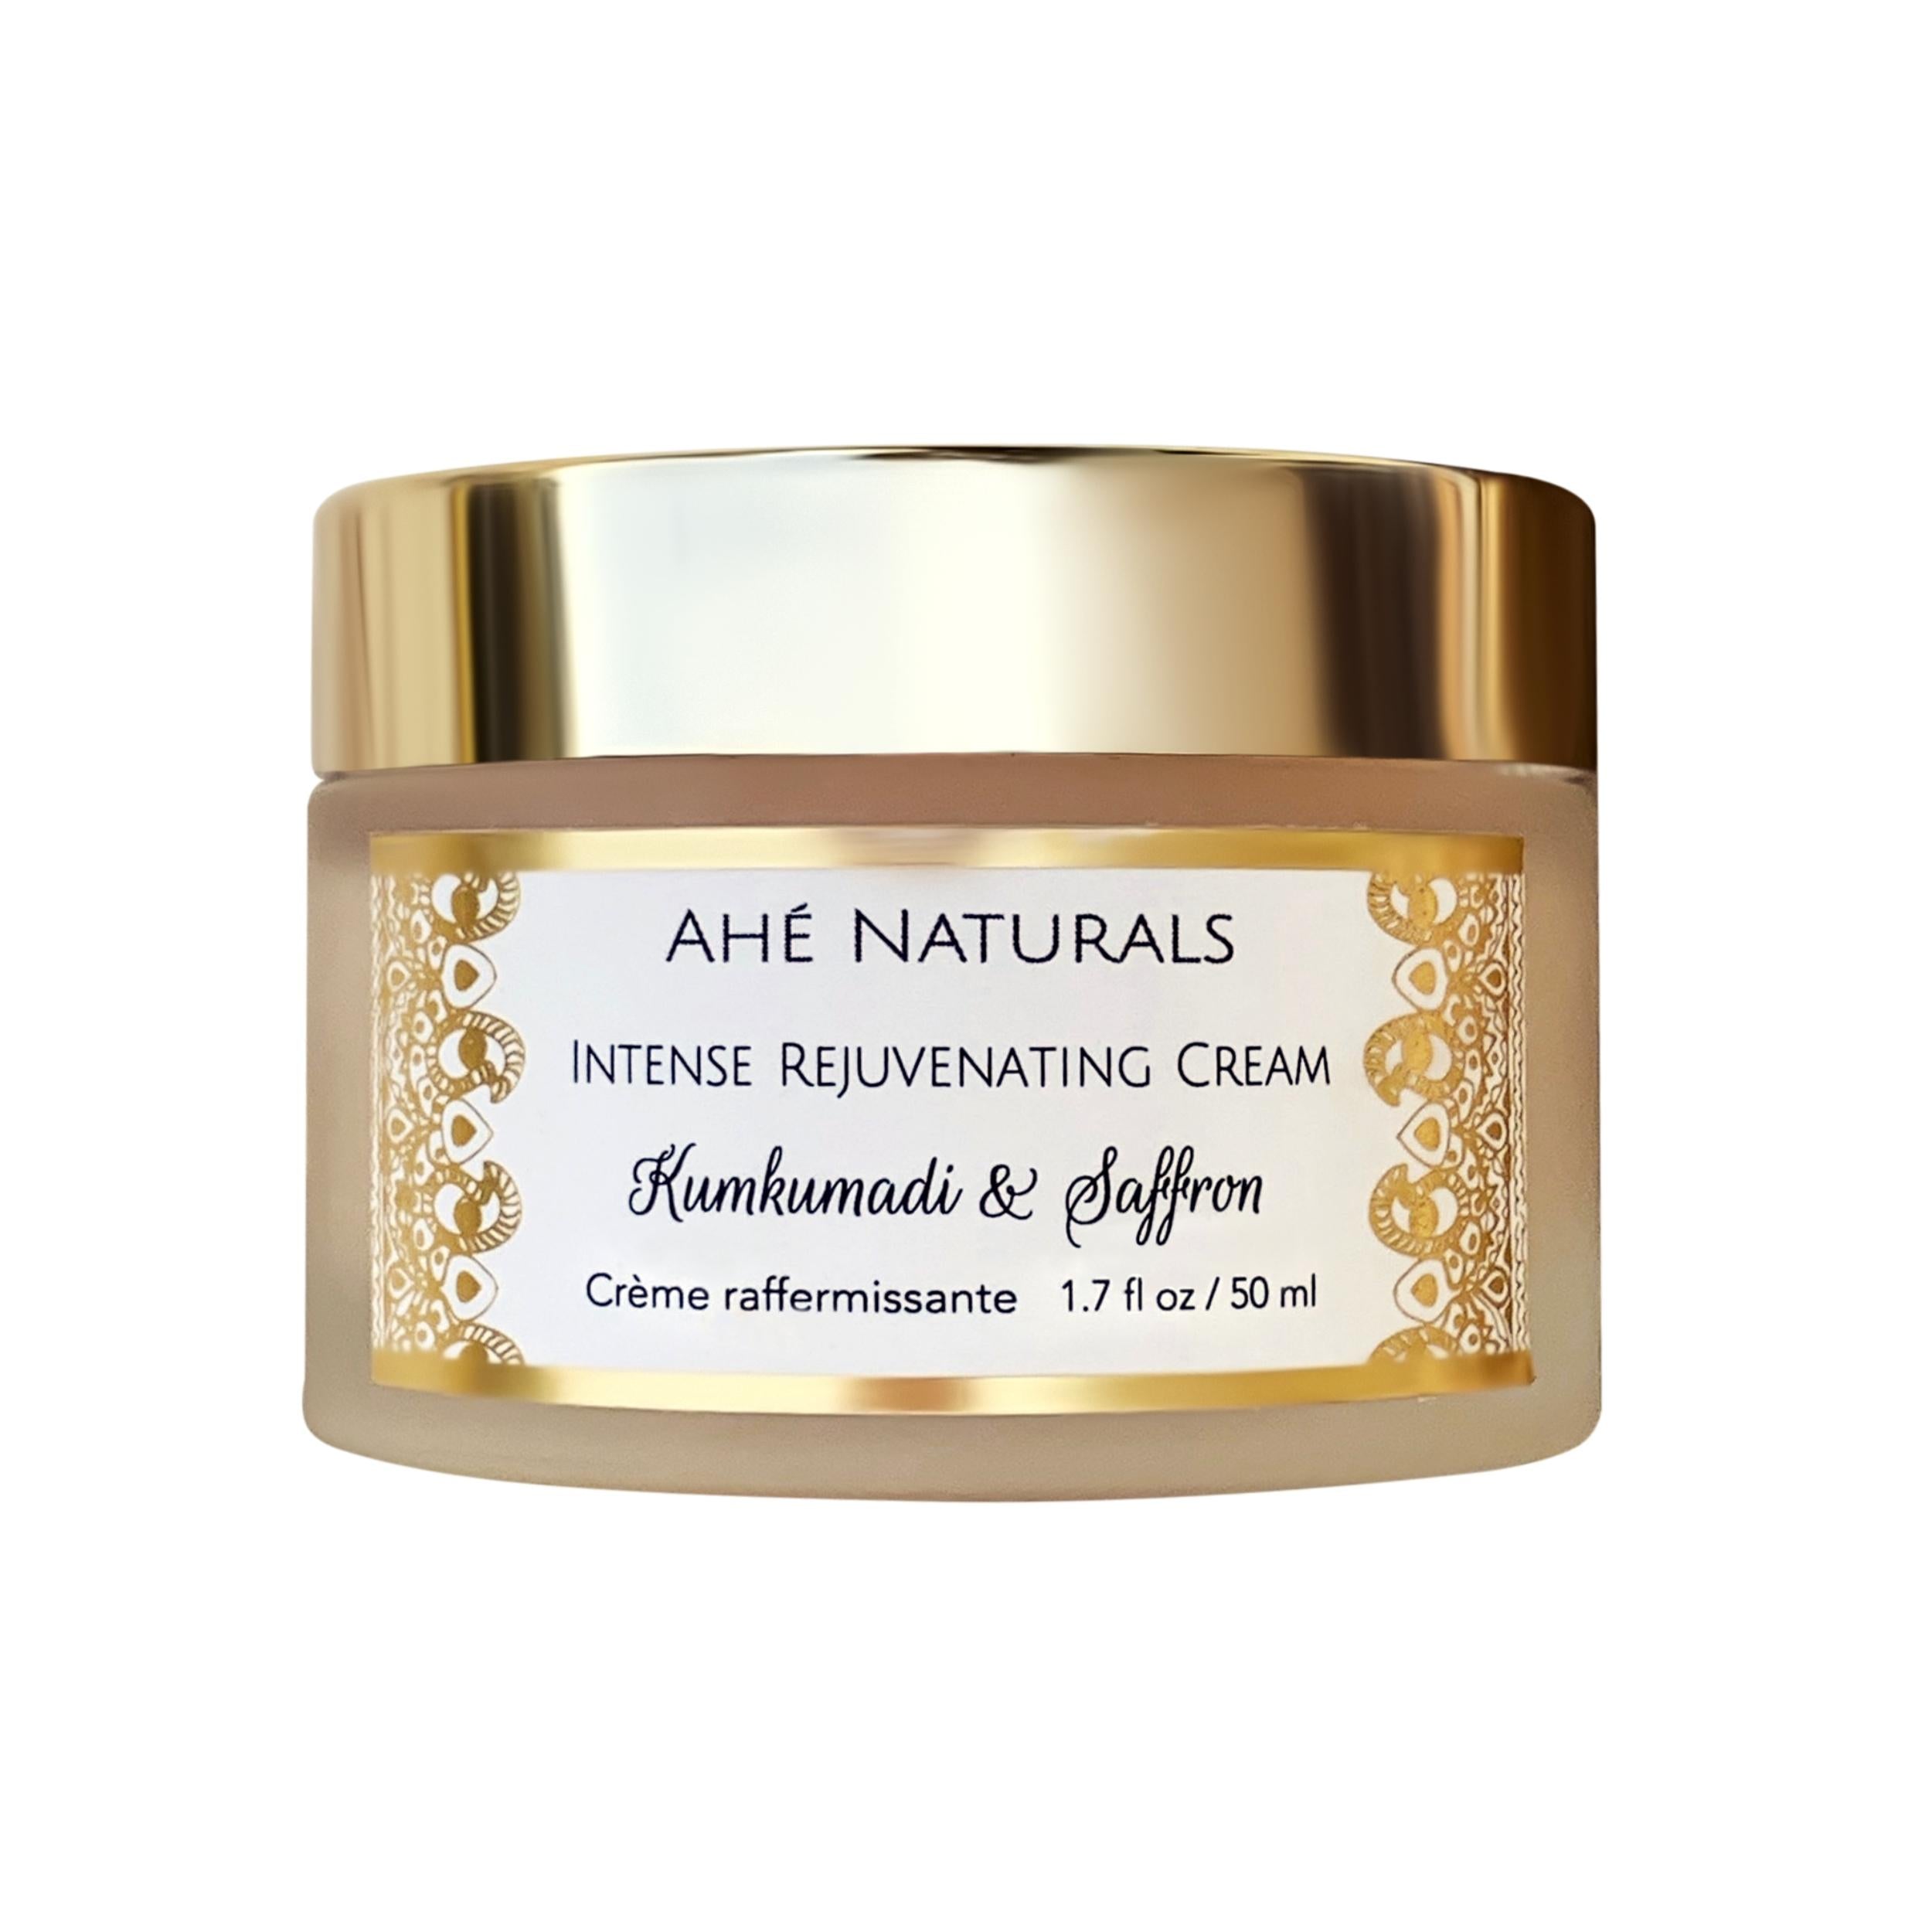 Kumkumadi & Saffron Intense Rejuvenating Cream - Ahé Naturals